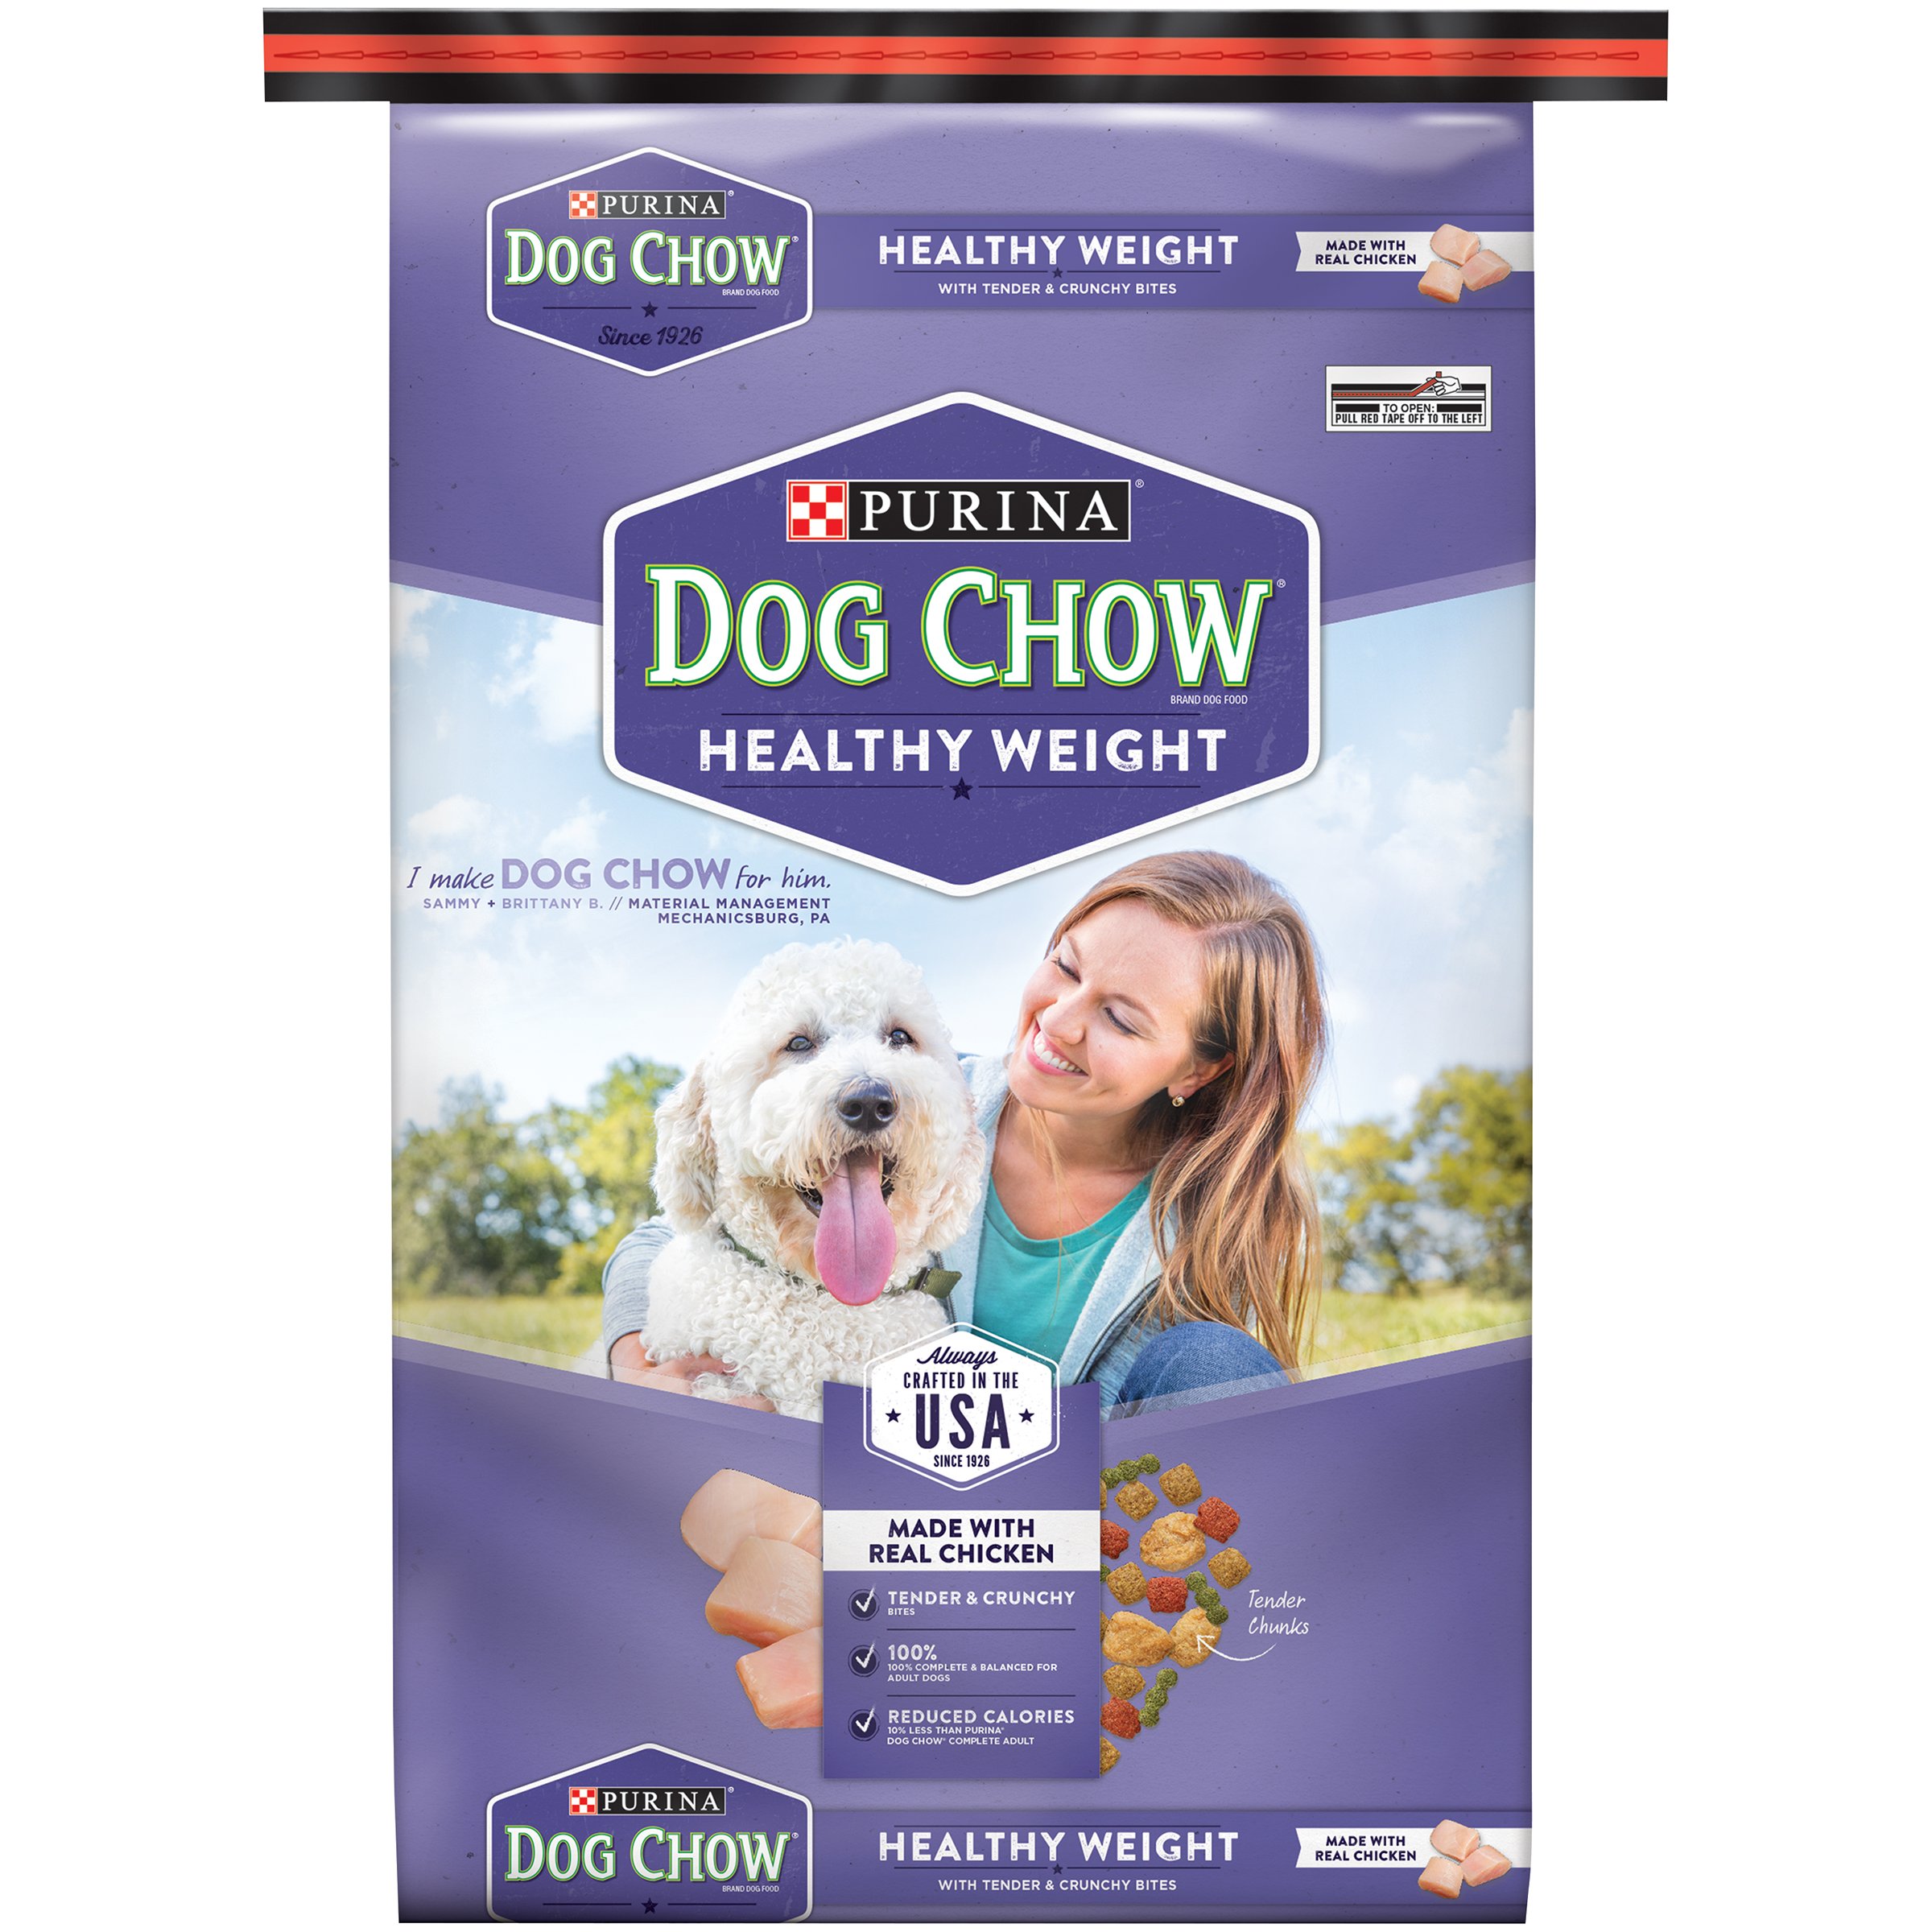 Purina Dog Chow Healthy Weight Dog Food 32 lb. Bag